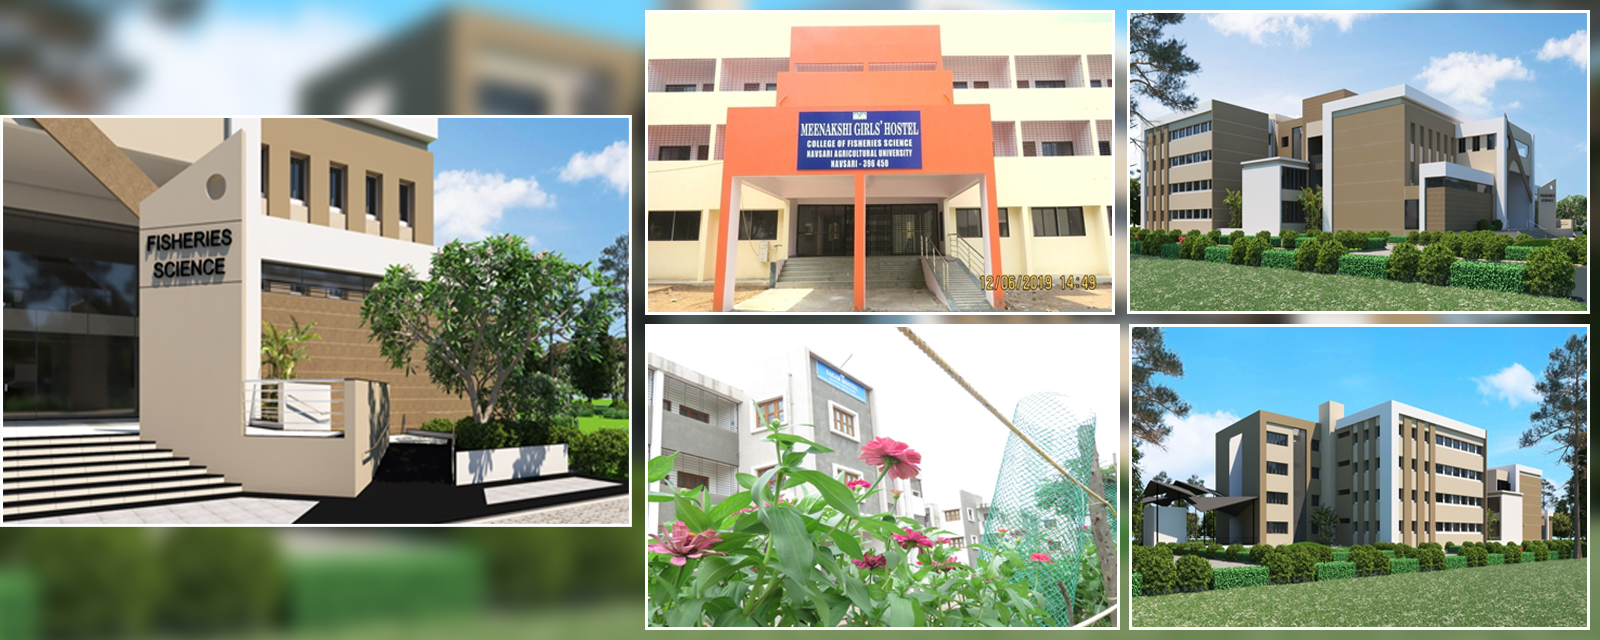 College of Fisheries Science, Kamdhenu University, Navsari, Gujarat.